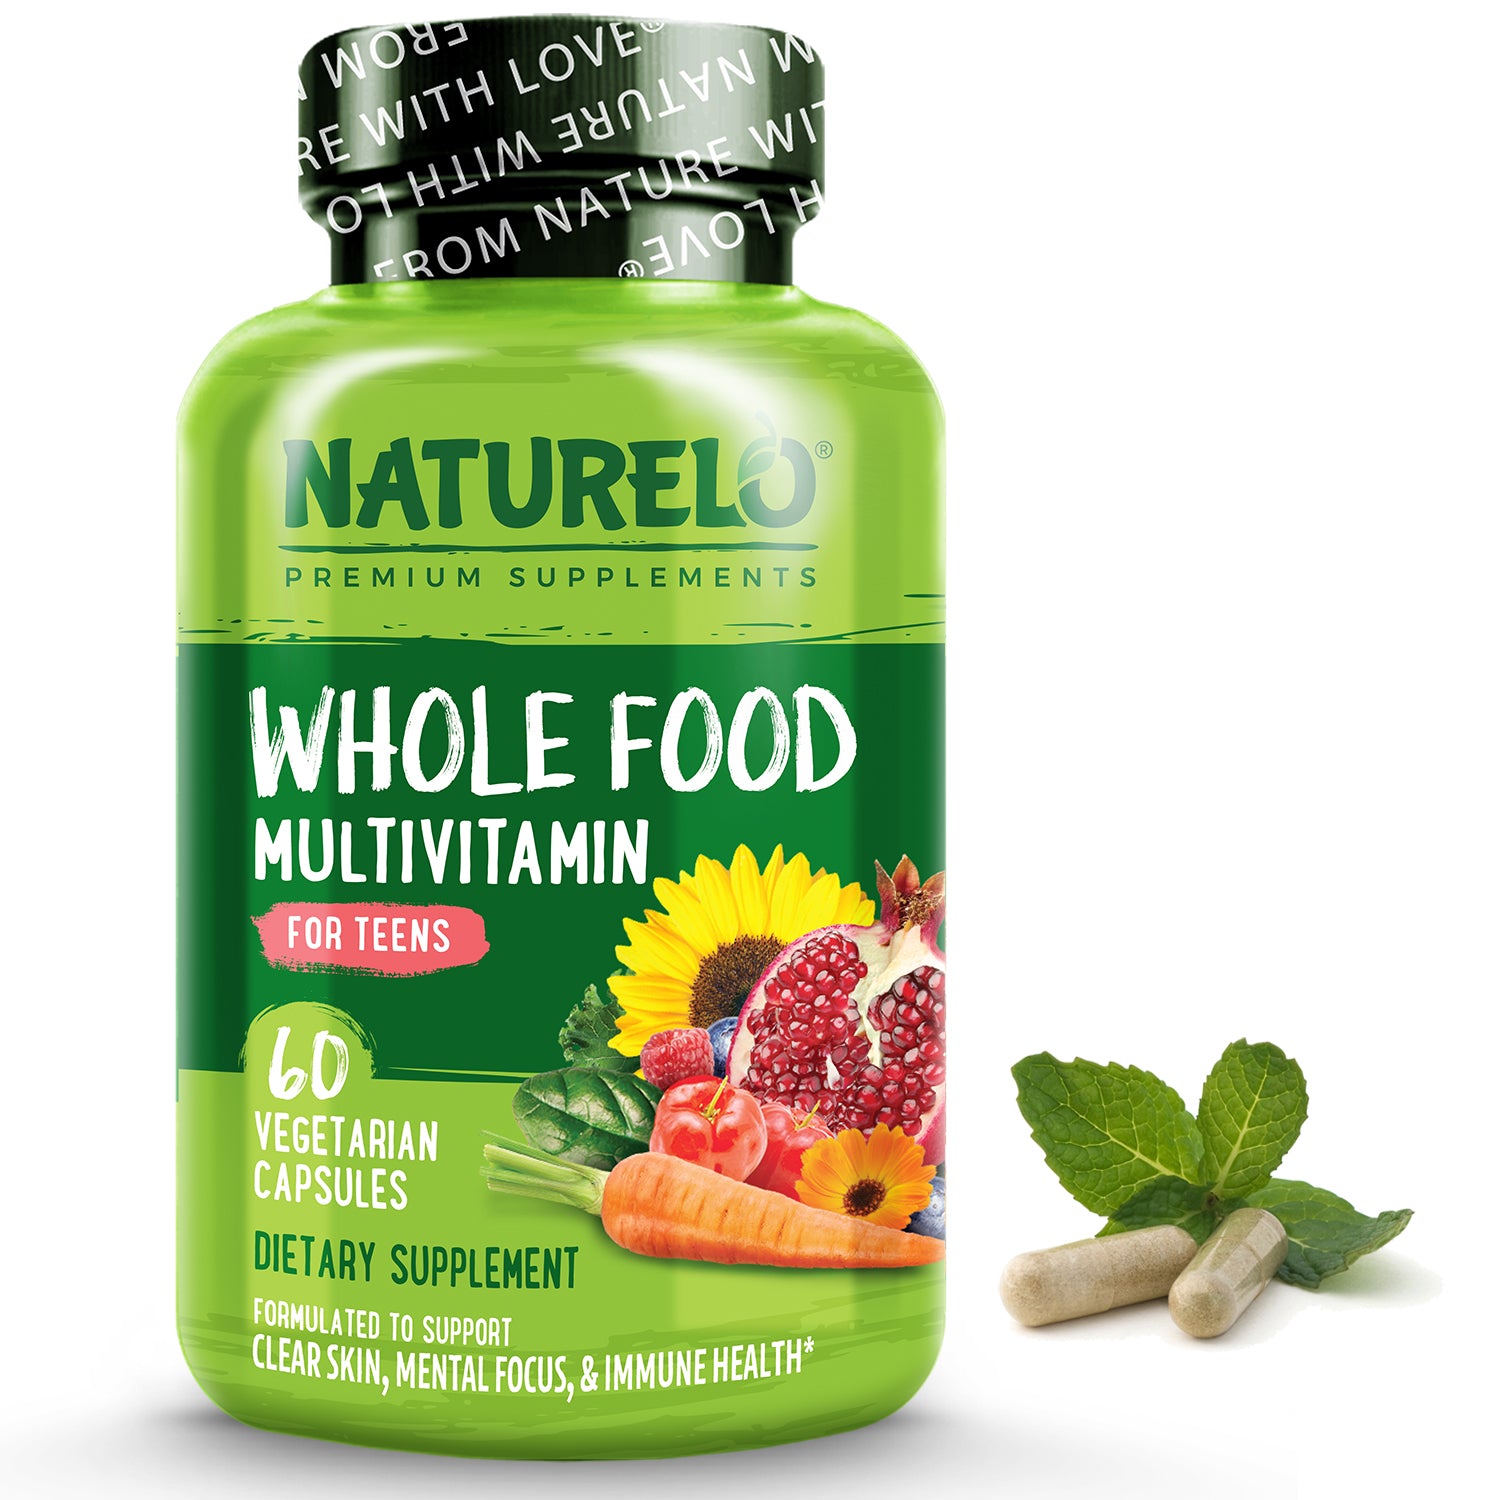 Naturelo Whole Food Multivitamin for teens